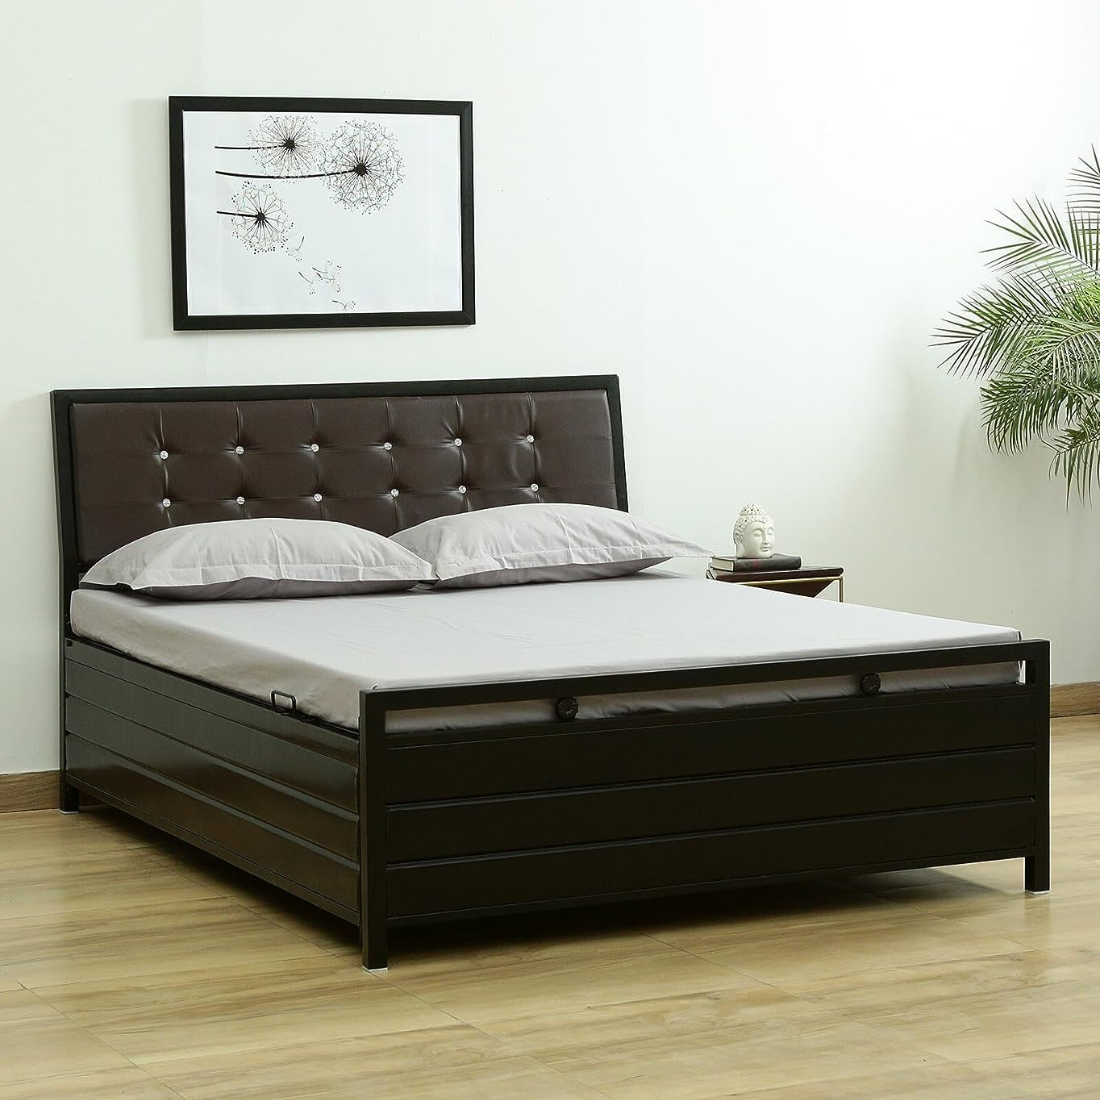 Heath Hydraulic Storage Queen Metal Bed with Black Cushion Headrest (Color - Black)